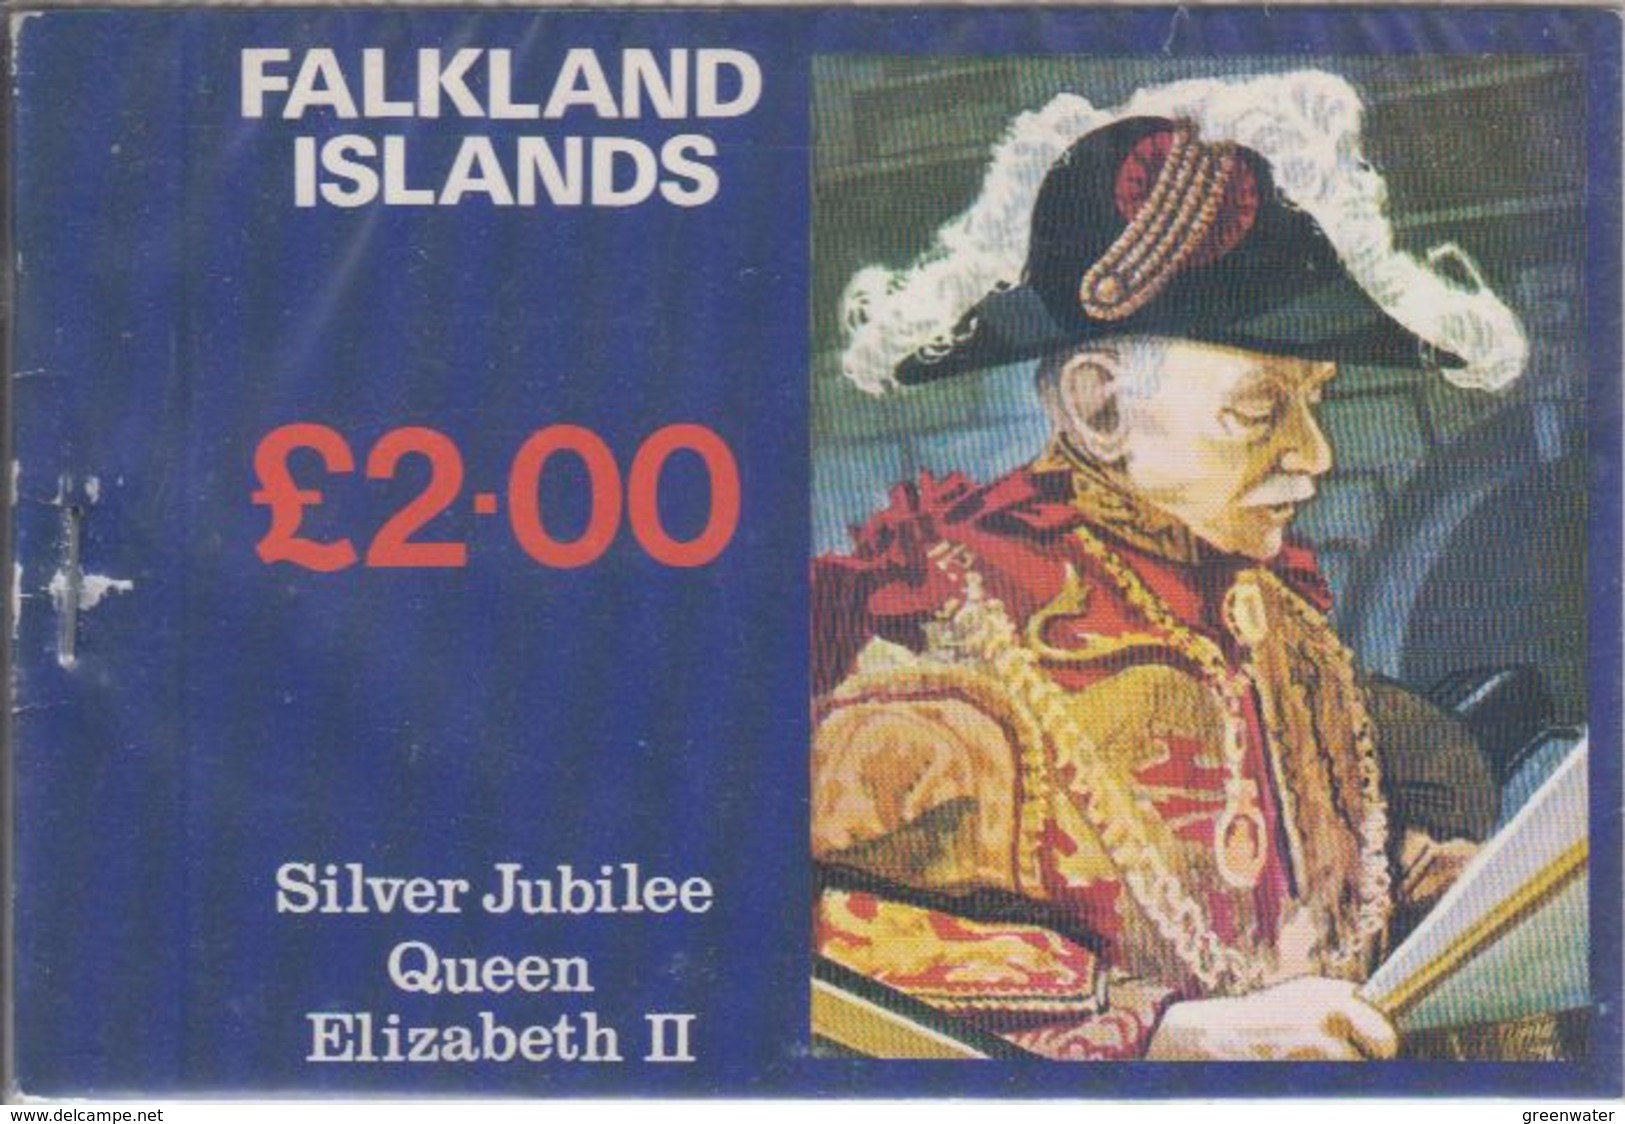 Falkland Islands 1977 Silver Jubilee Booklet ** Mnh (40557) - Falkland Islands